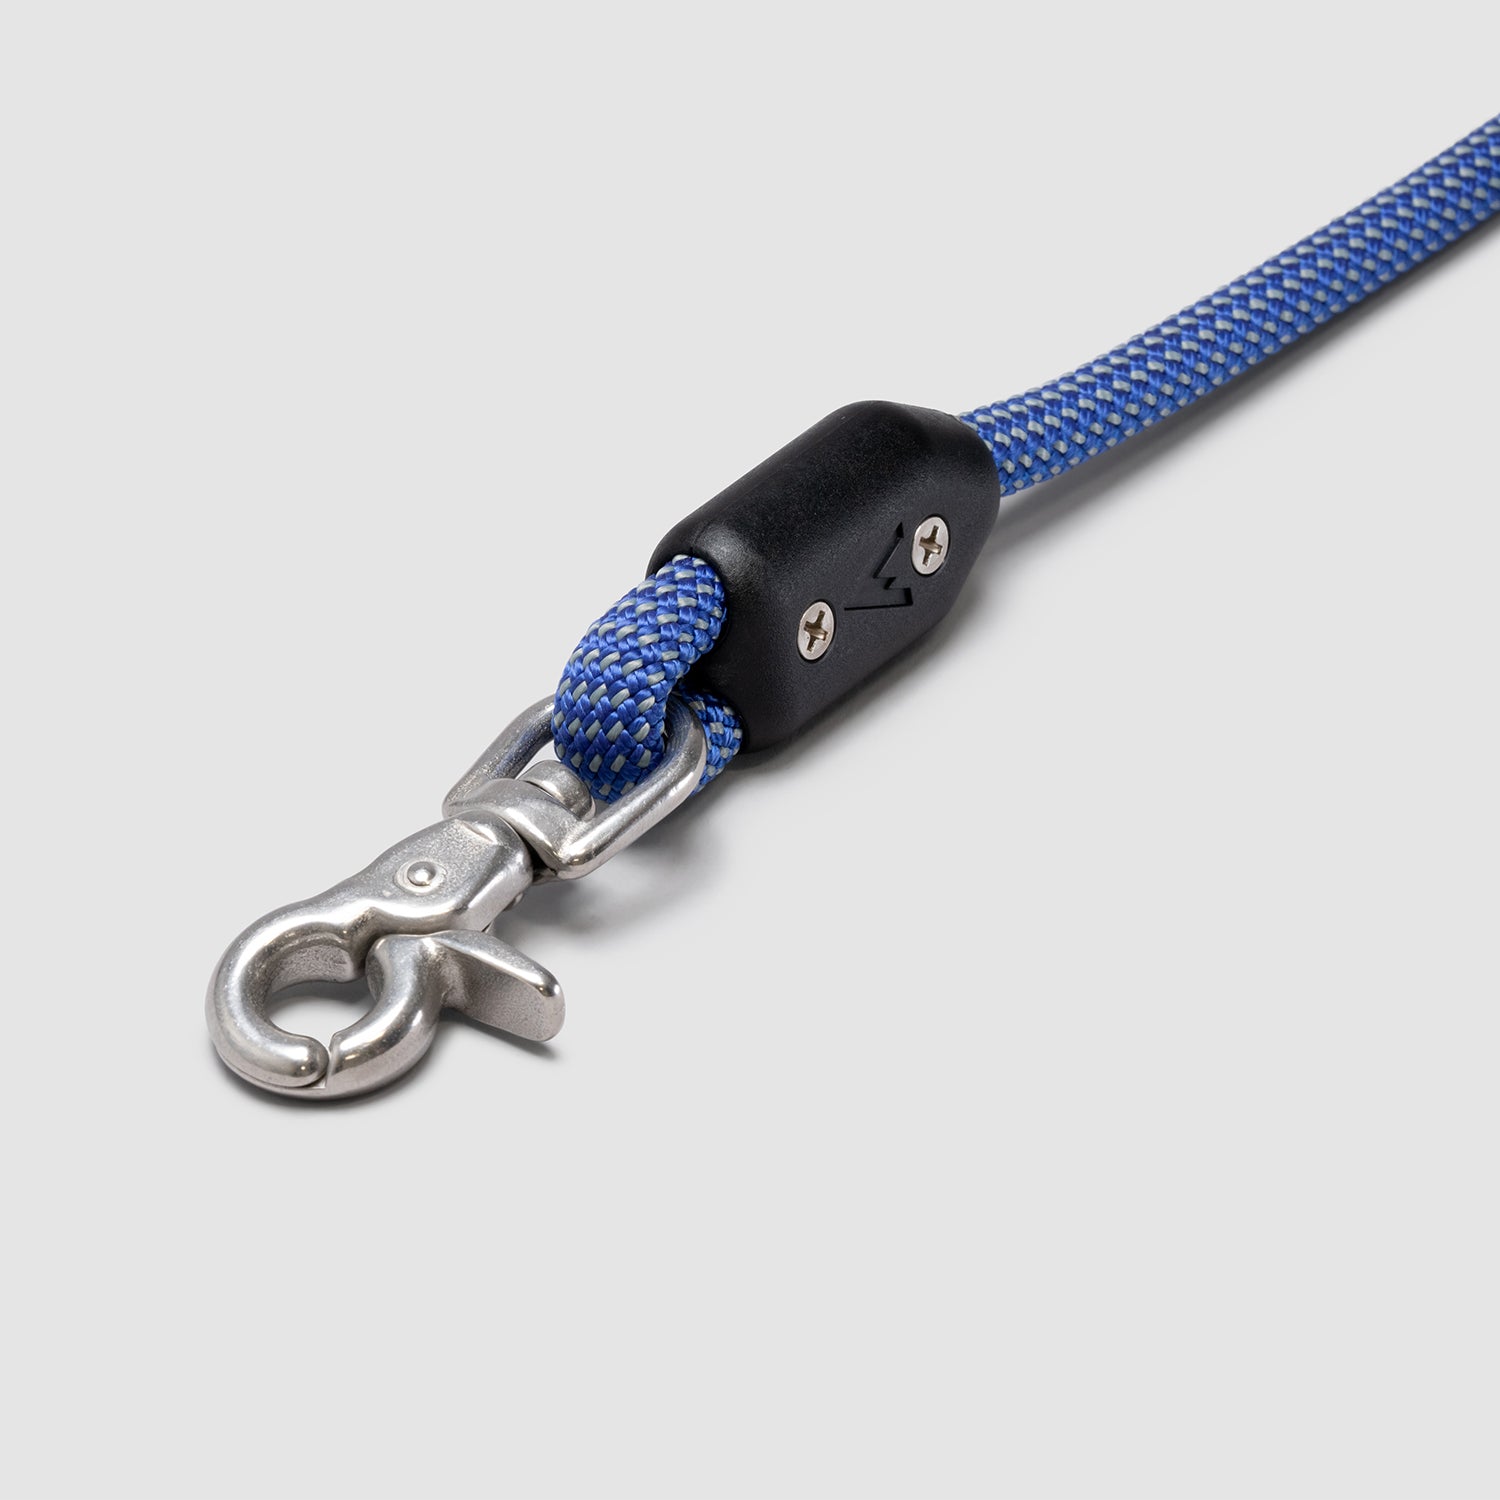 atlas pet company lifetime leash climbing rope lifetime warranty dog leash --twilight